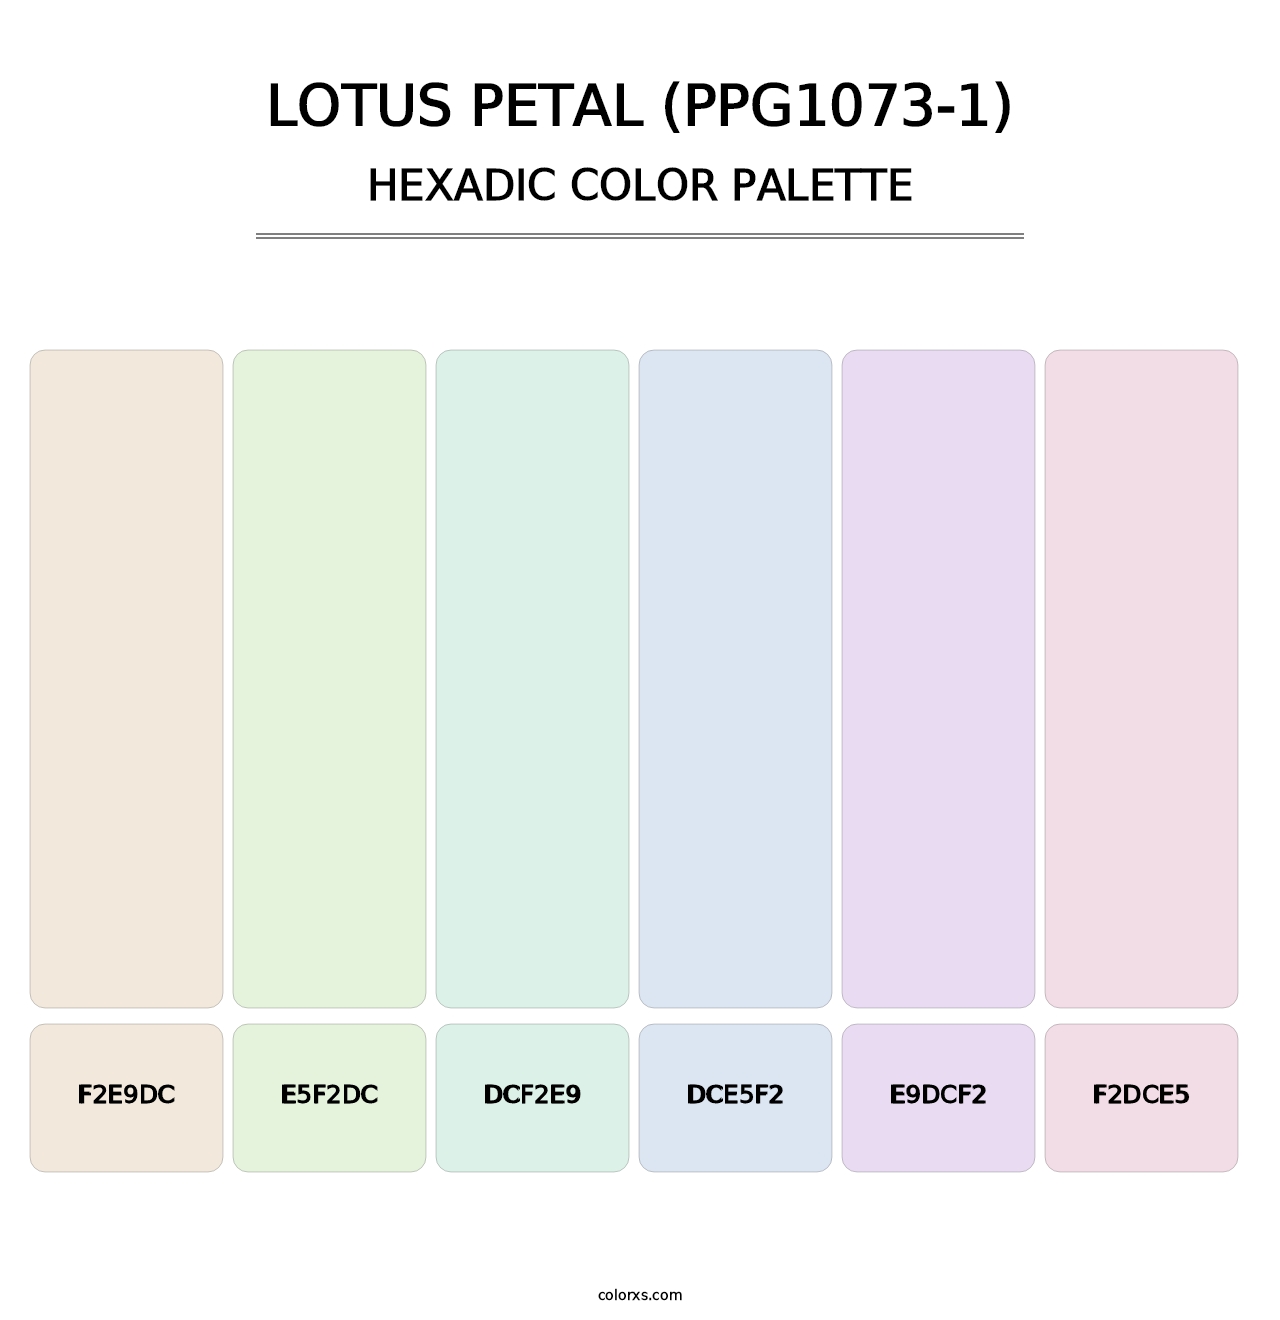 Lotus Petal (PPG1073-1) - Hexadic Color Palette